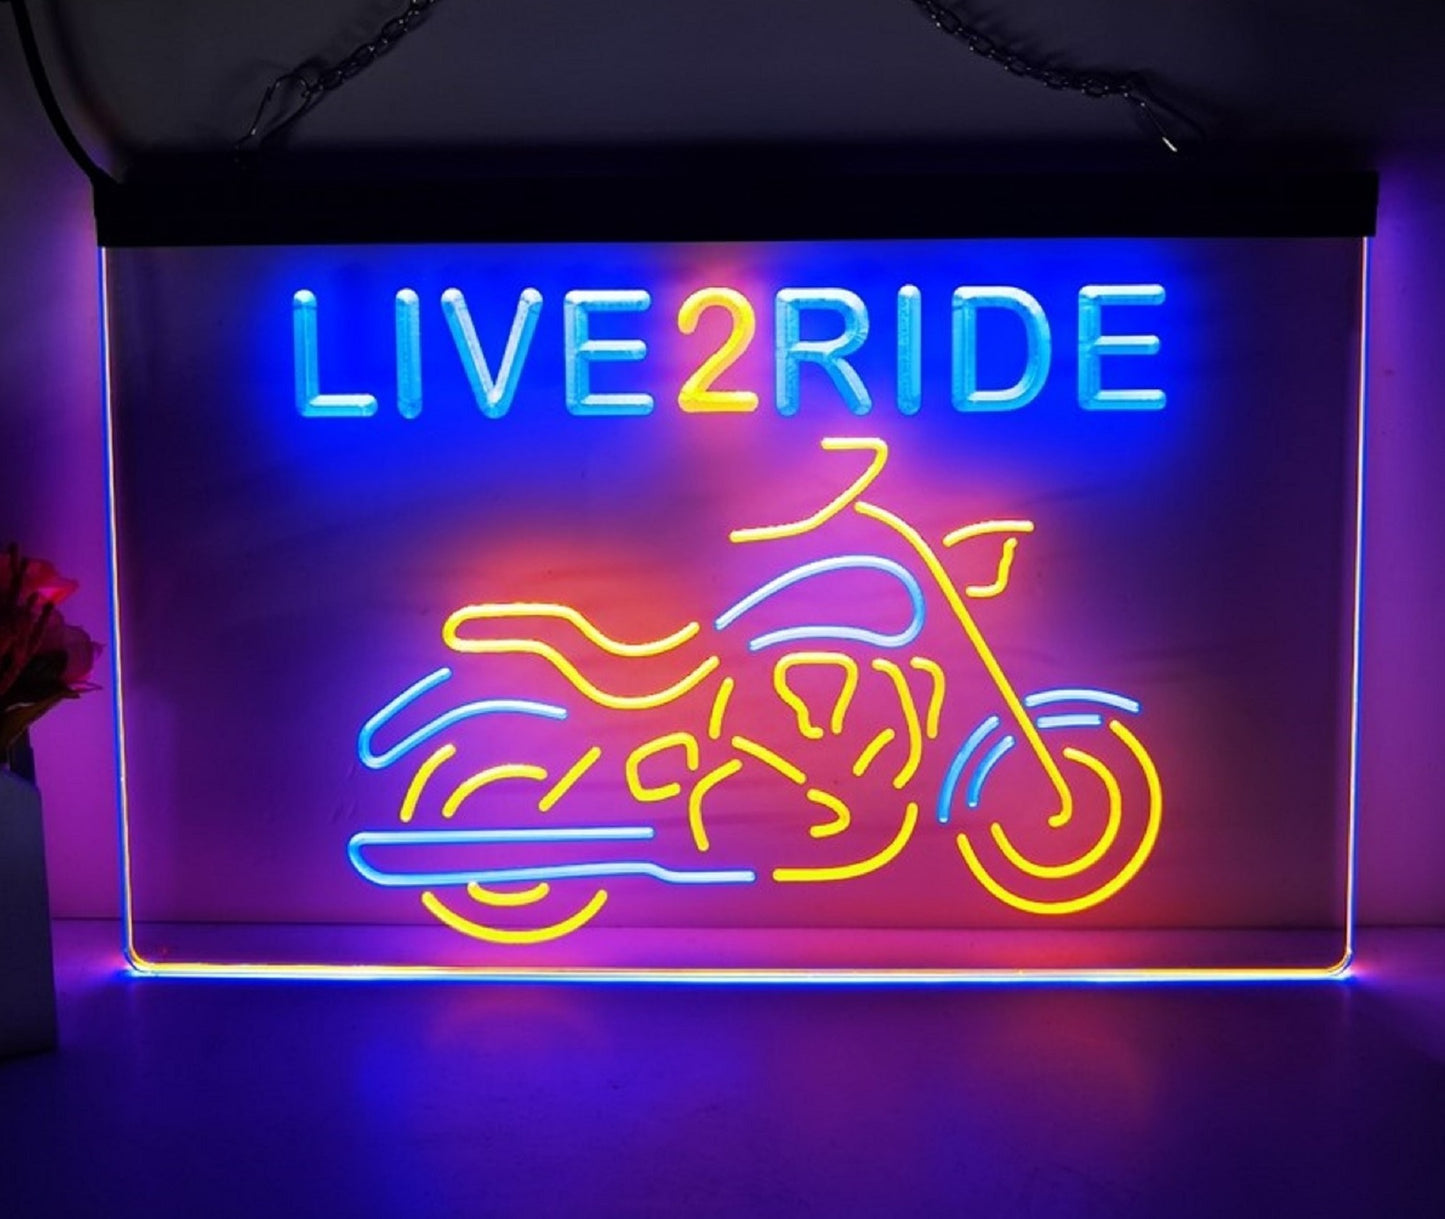 Neon Sign Dual Color Live 2 Ride Home Wall Desktop Decor Free Shipping